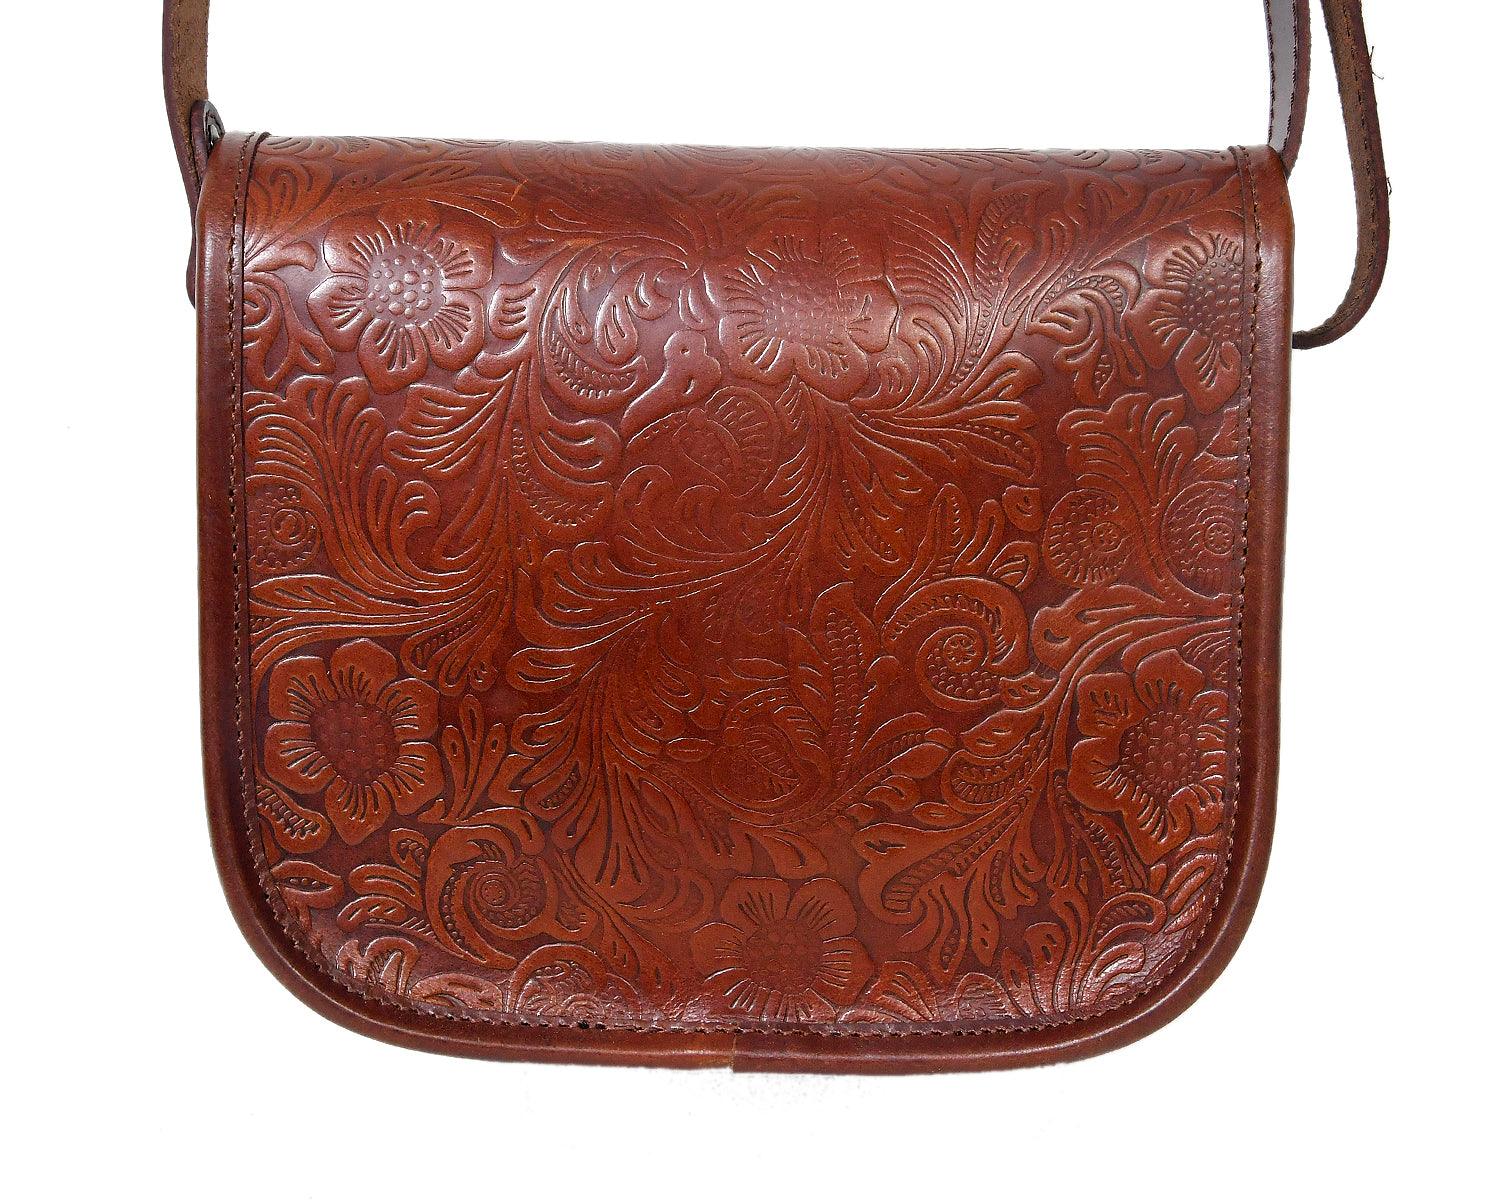 Buy Hand Painted Leather Handbag, Tooled Leather Bag, Genuine Full Grain Embossed  Leather Bags for Women Handmade in Spain Online in India - Etsy